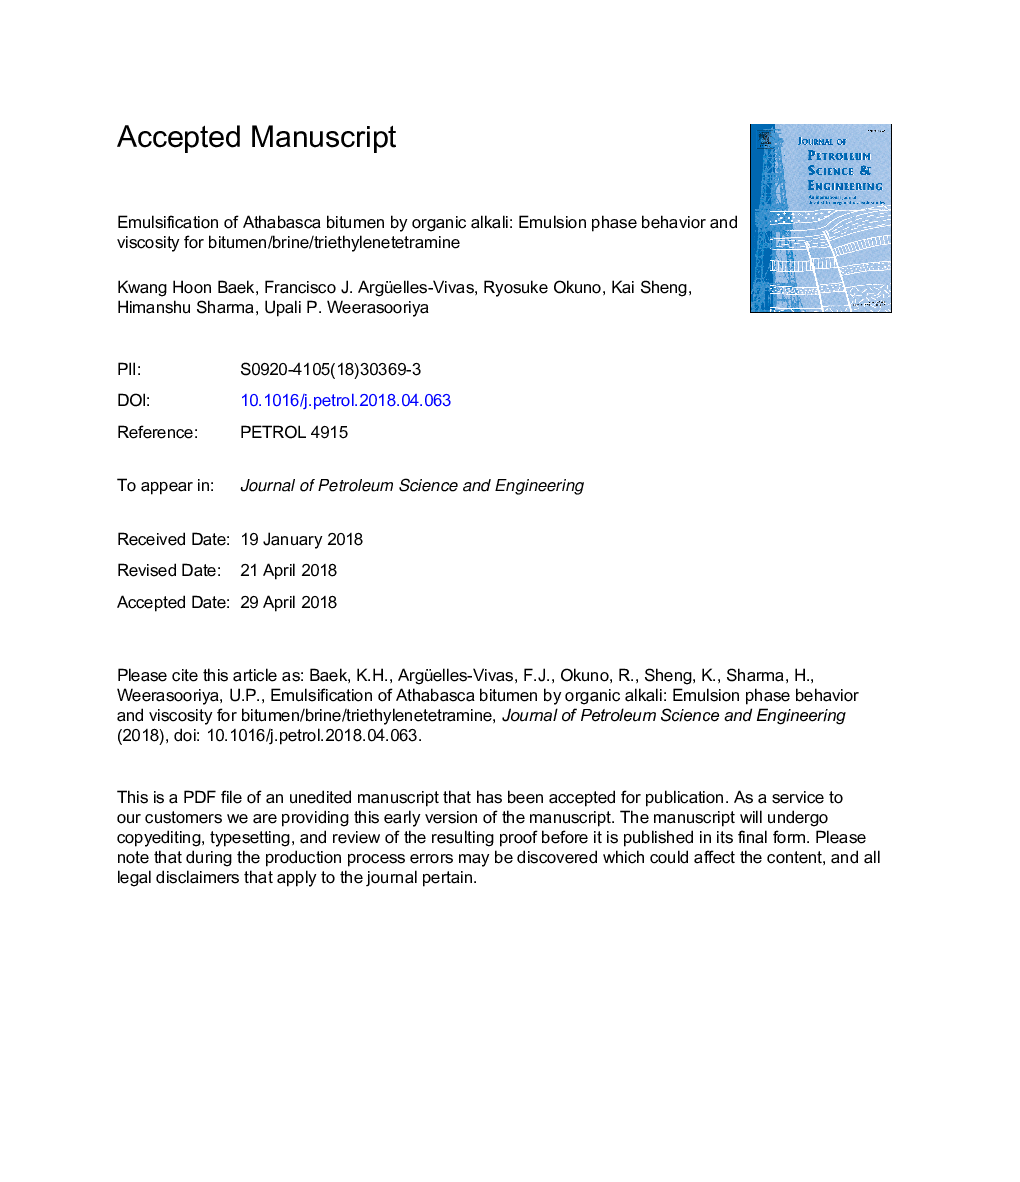 Emulsification of Athabasca bitumen by organic alkali: Emulsion phase behavior and viscosity for bitumen/brine/triethylenetetramine